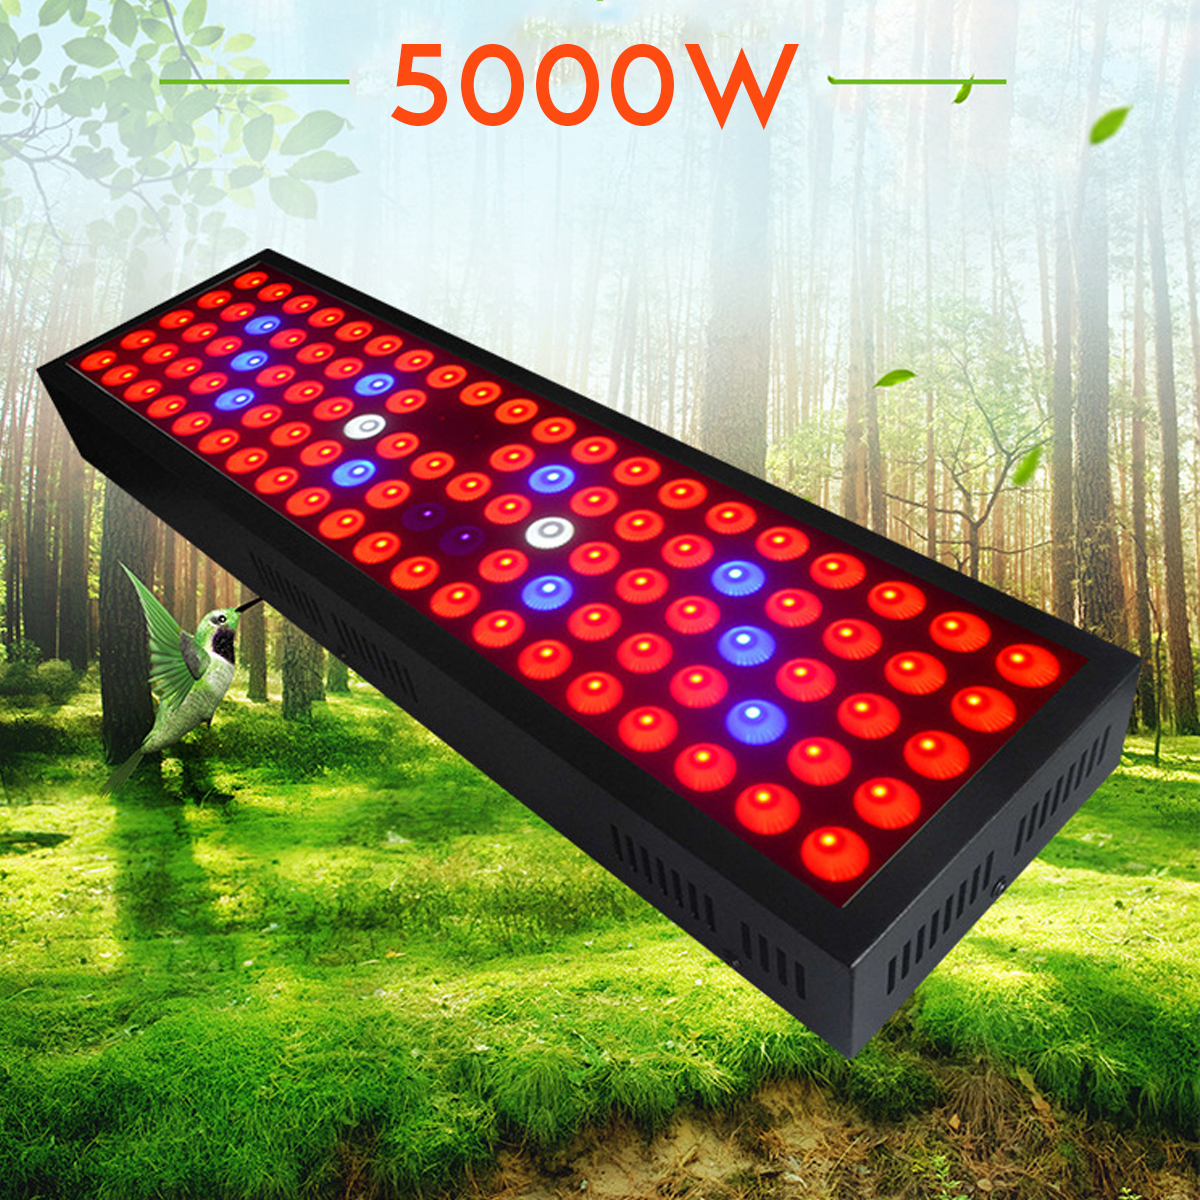 Details about   5000W LED Grow Light Full Spectrum Indoor Hydroponics Veg Flower Lamp Panel PH 